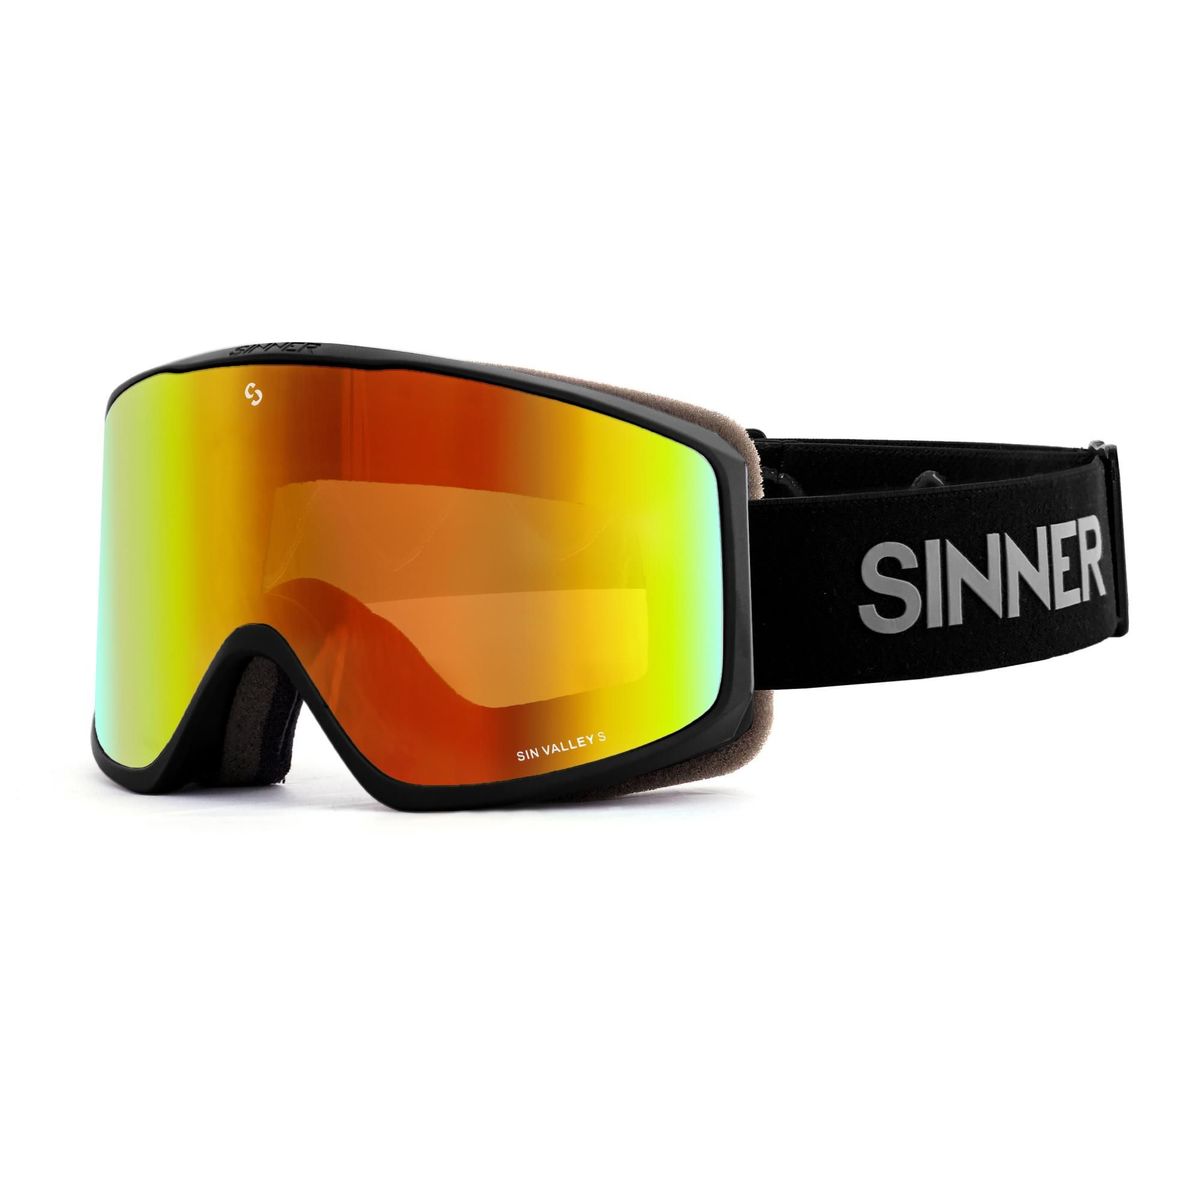 Sinner SIN VALLEY S skibril mat zwart/oranje + extra roze S1 lens